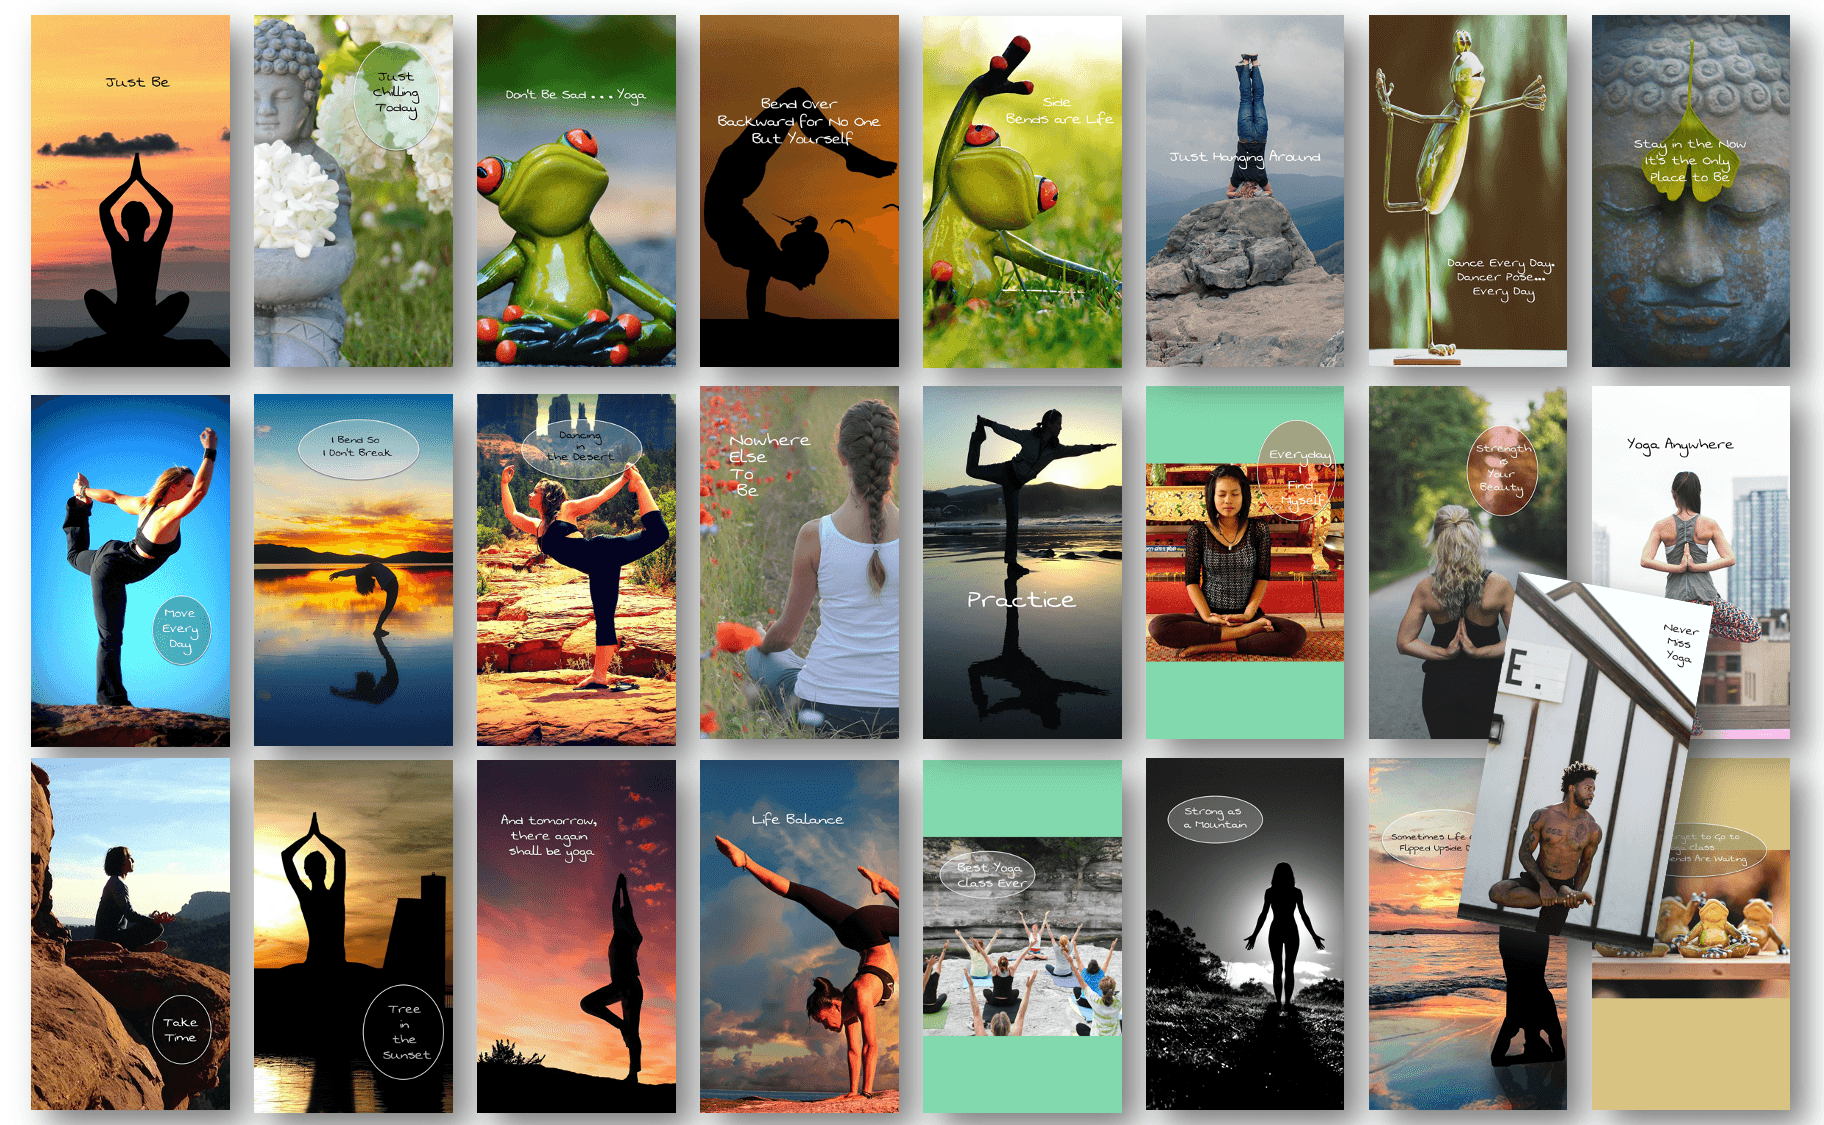 25 More Yoga Stories